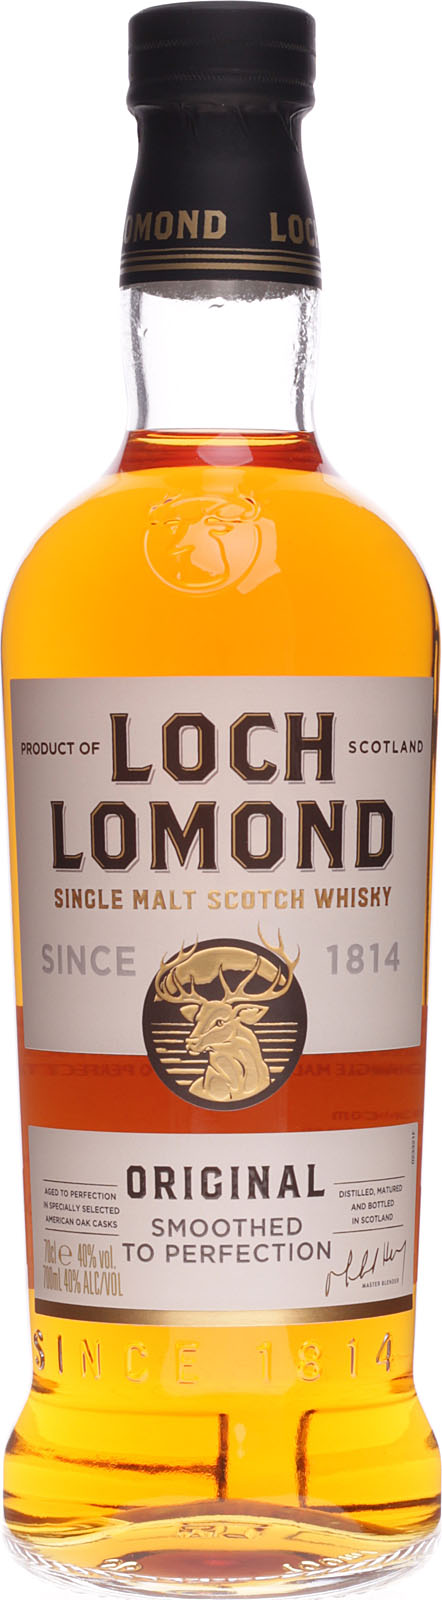 Loch 0,7l Malt 40% Lomond Single Original